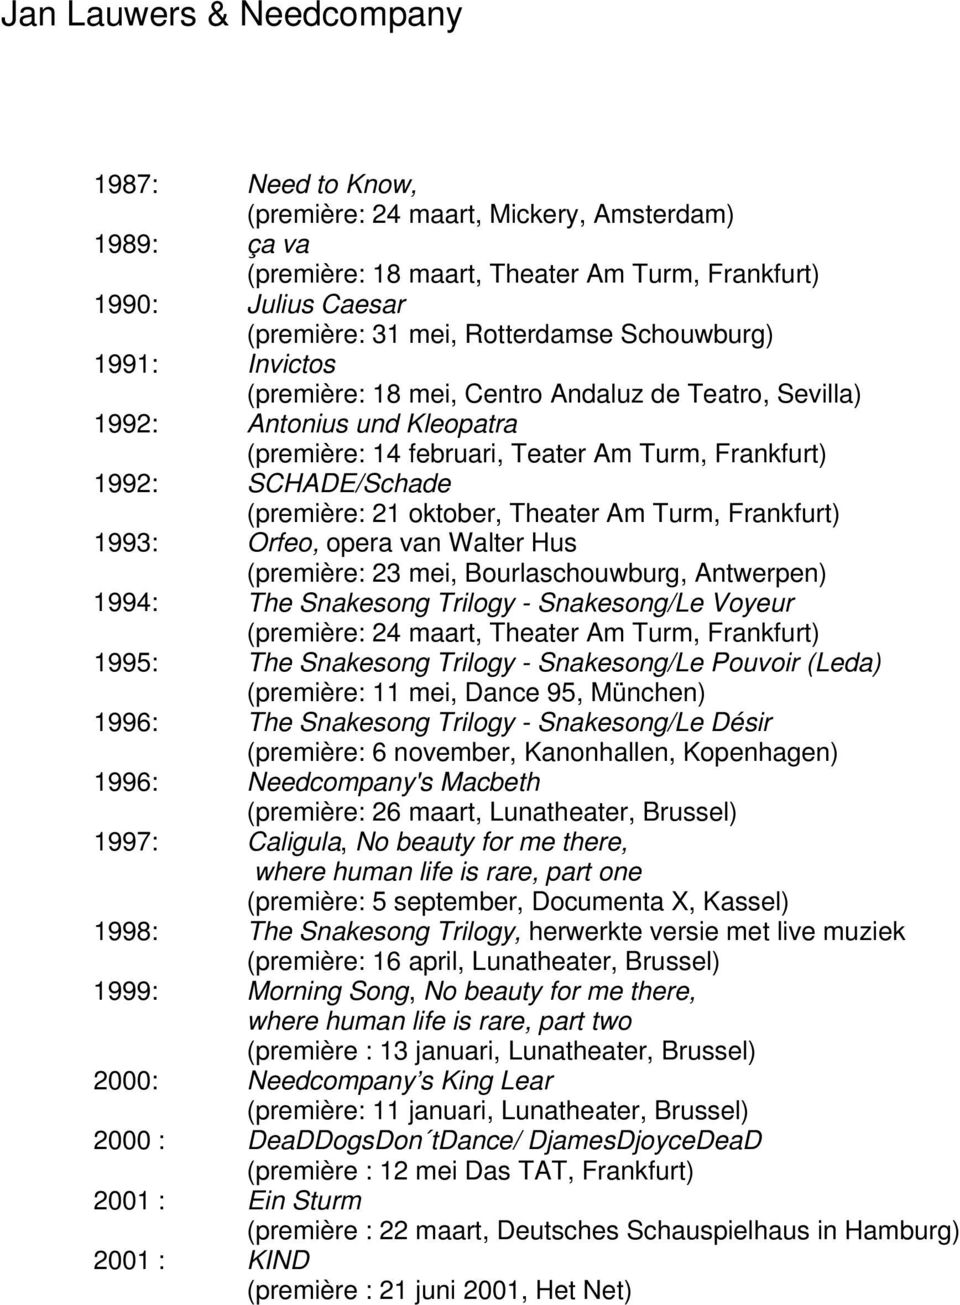 oktober, Theater Am Turm, Frankfurt) 1993: Orfeo, opera van Walter Hus (première: 23 mei, Bourlaschouwburg, Antwerpen) 1994: The Snakesong Trilogy - Snakesong/Le Voyeur (première: 24 maart, Theater